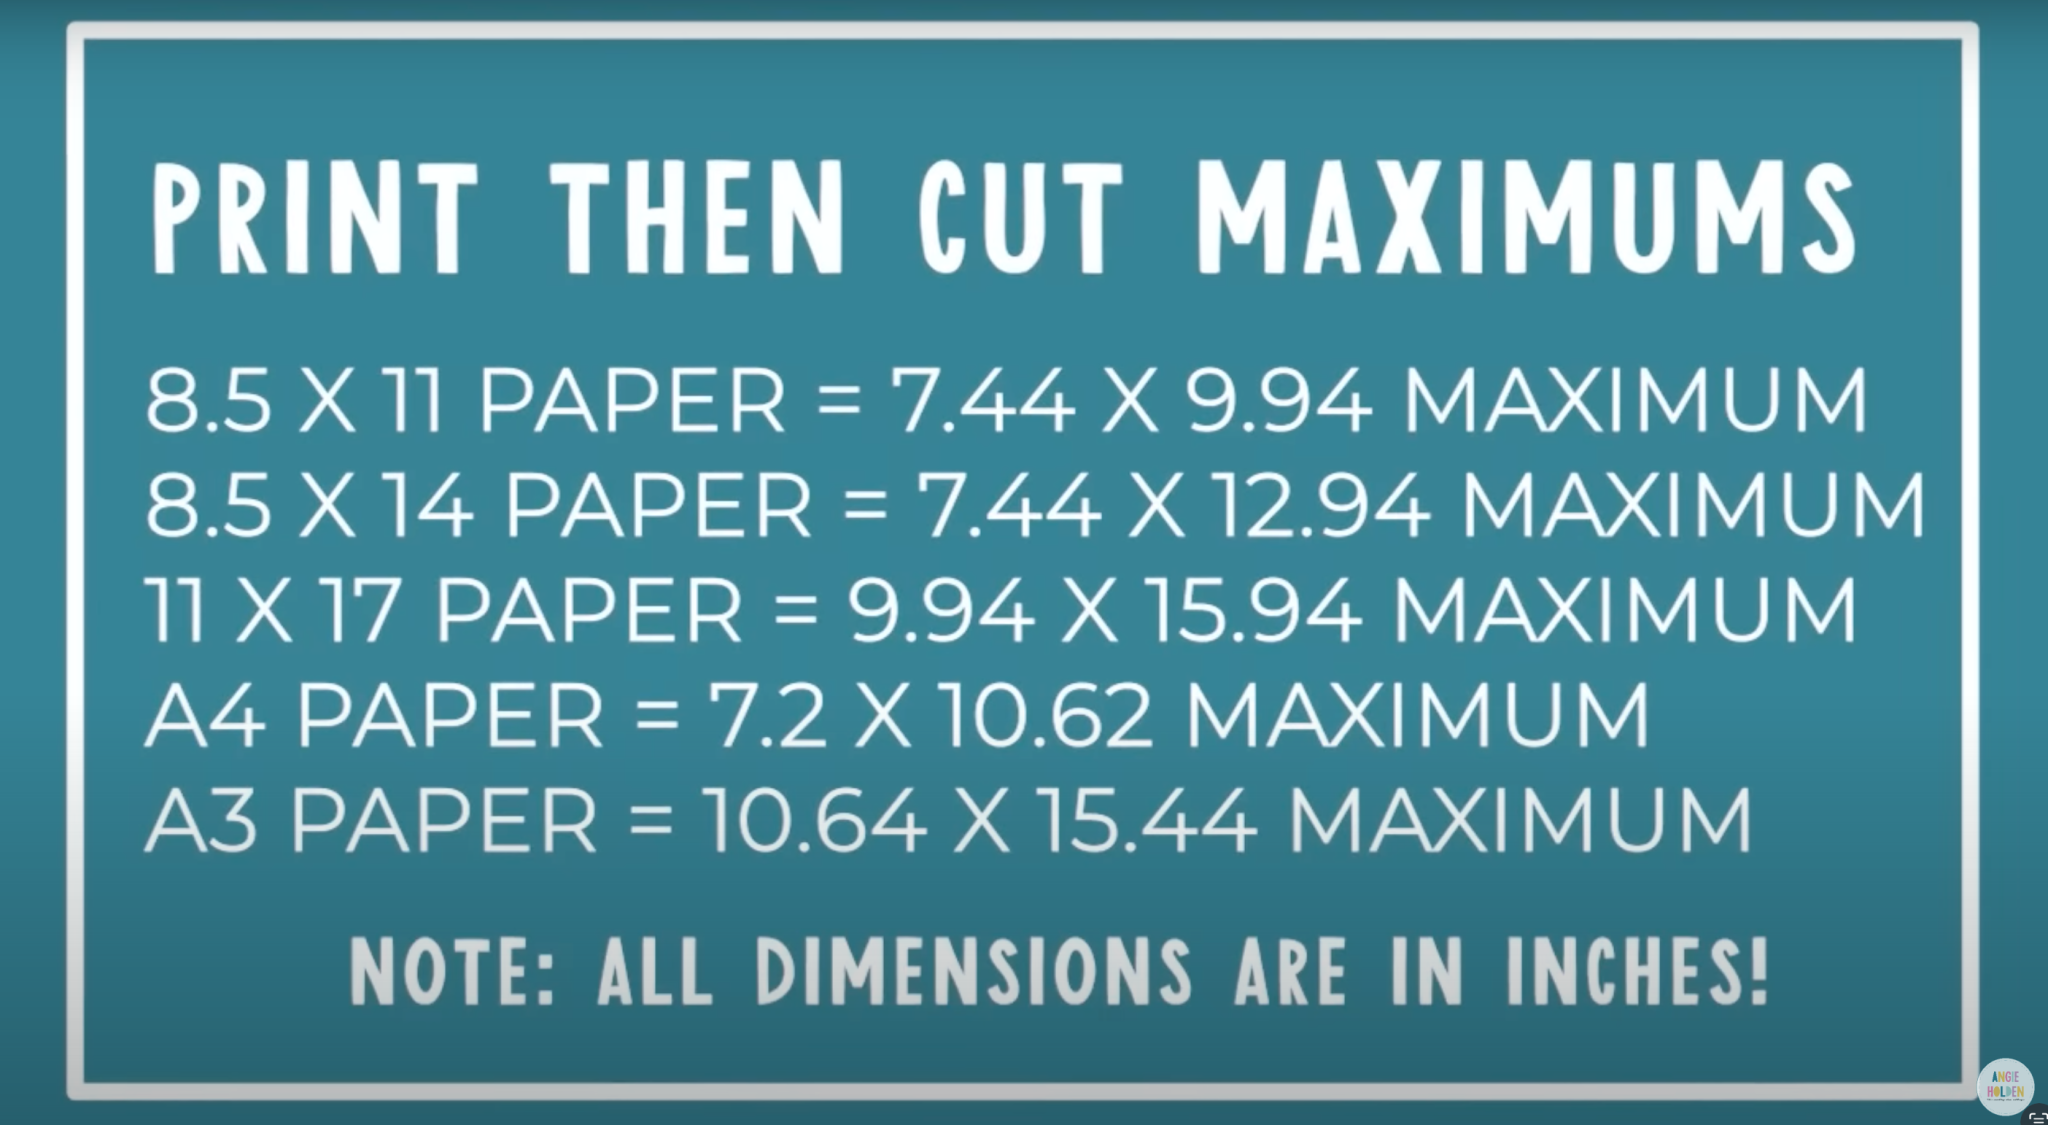 Print Then Cut size guide.